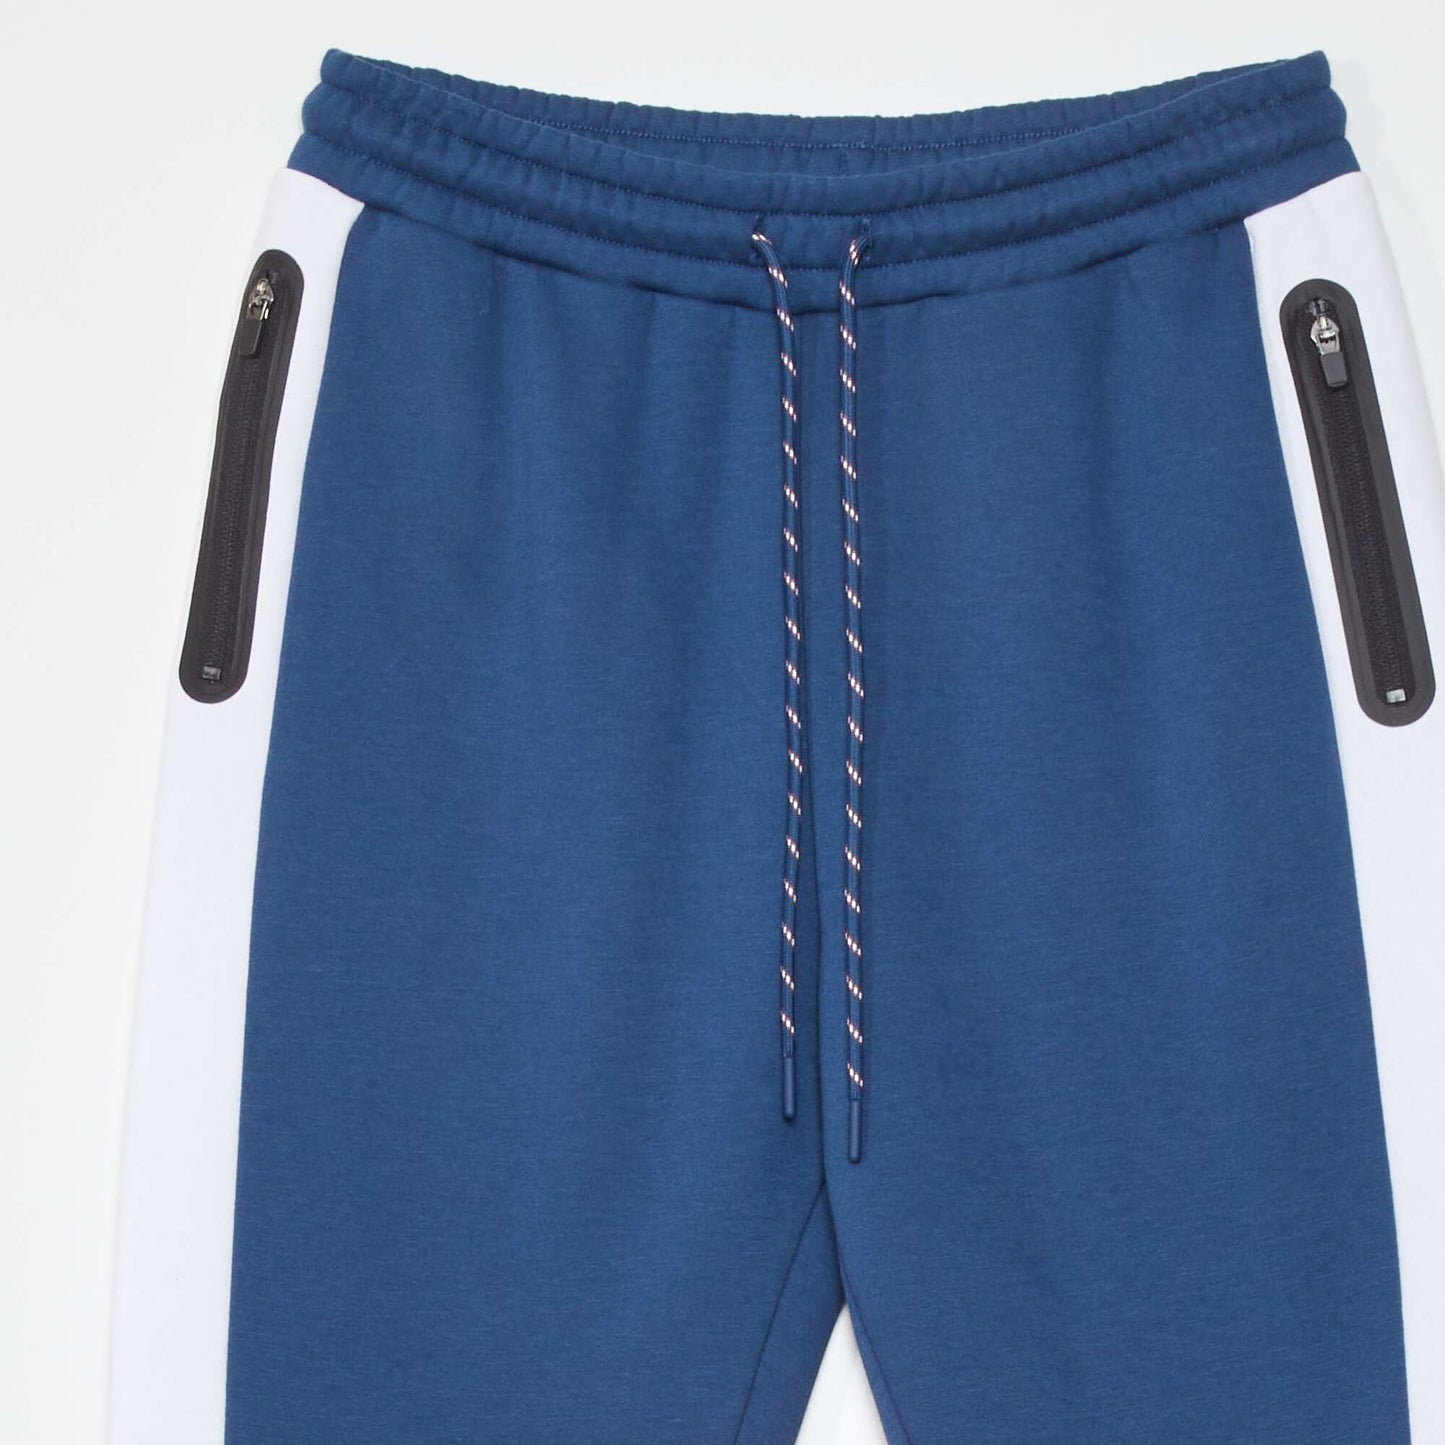 Sweatshirt fabric joggers dark blue